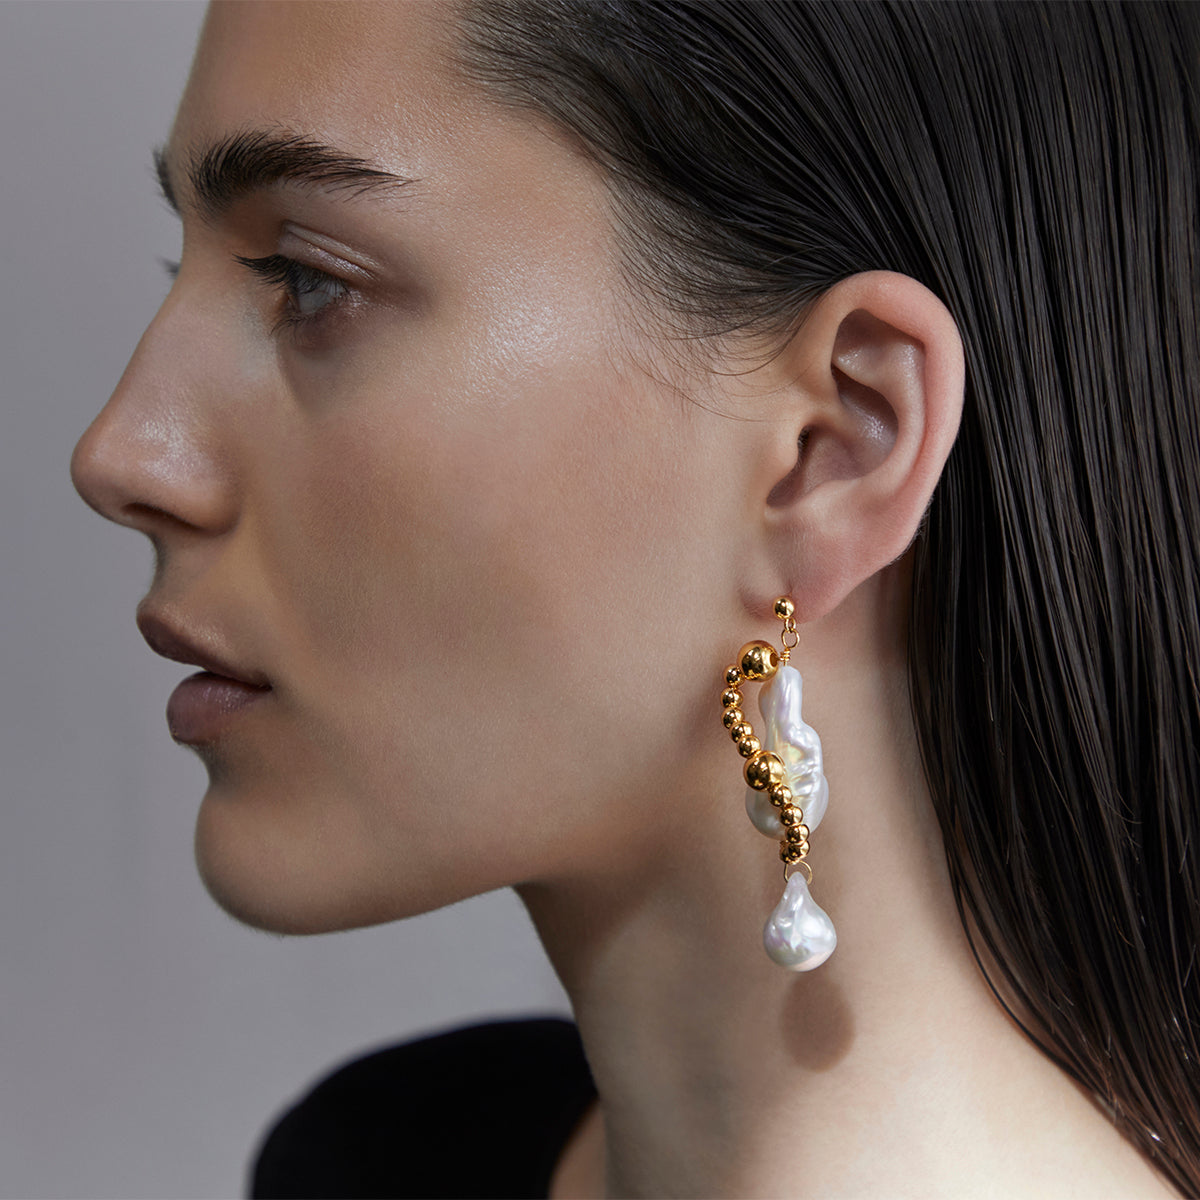 Lucille-earrings-Amber-Sceats-1.jpg